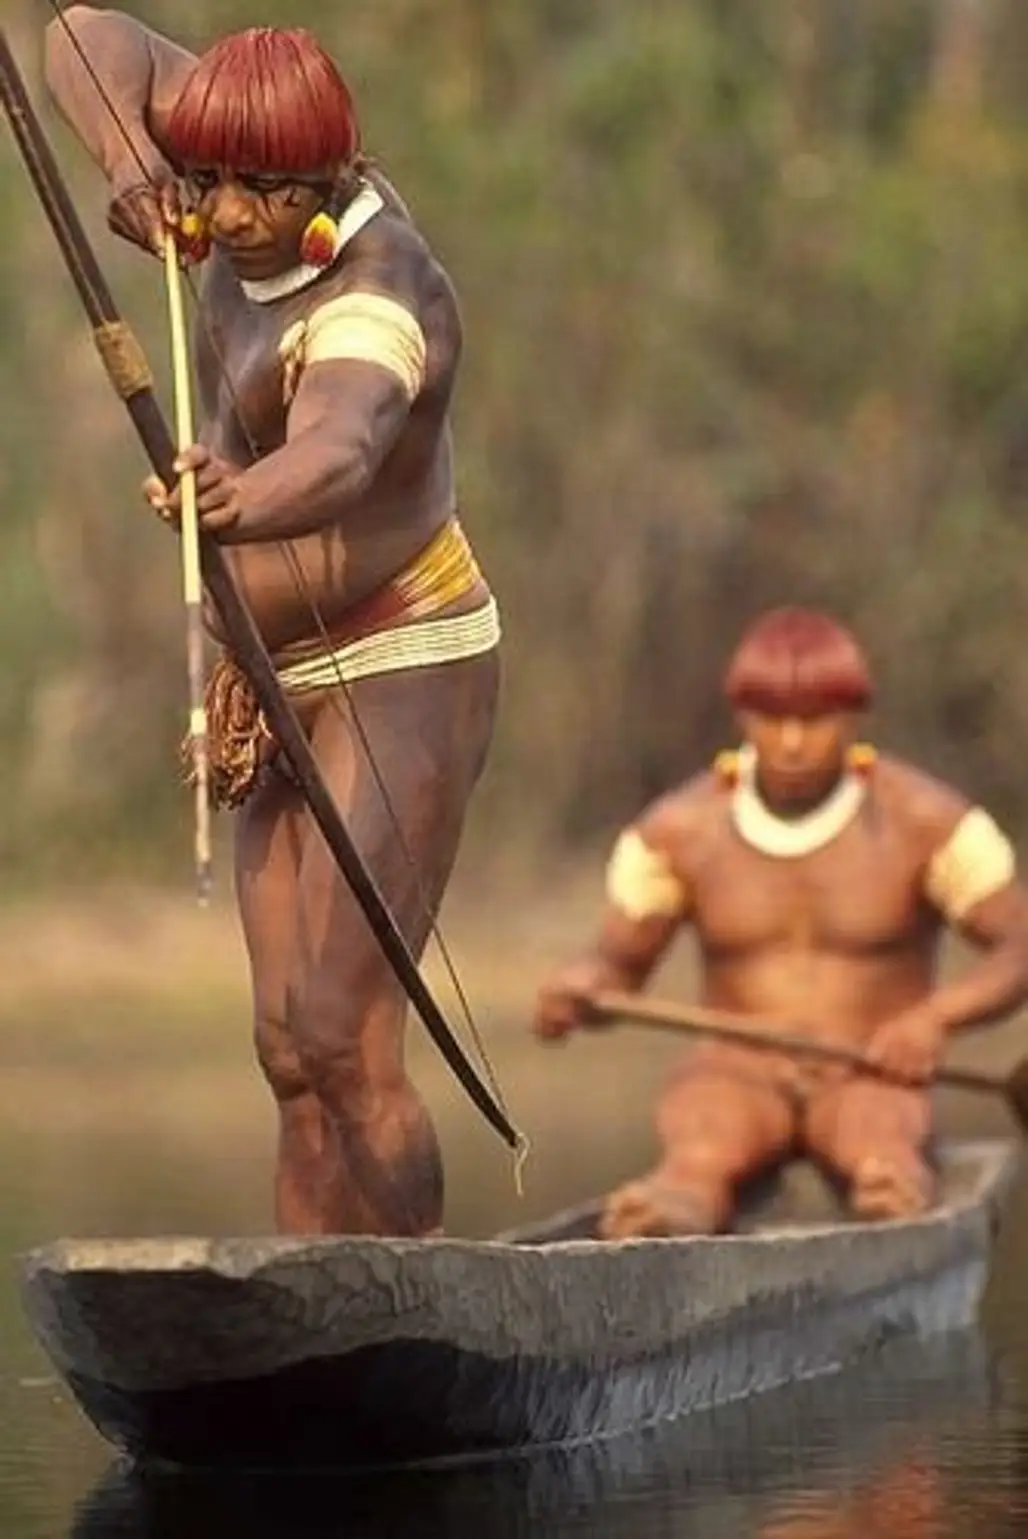 Yaulapiti Catching Fish in Xingu, Brazil